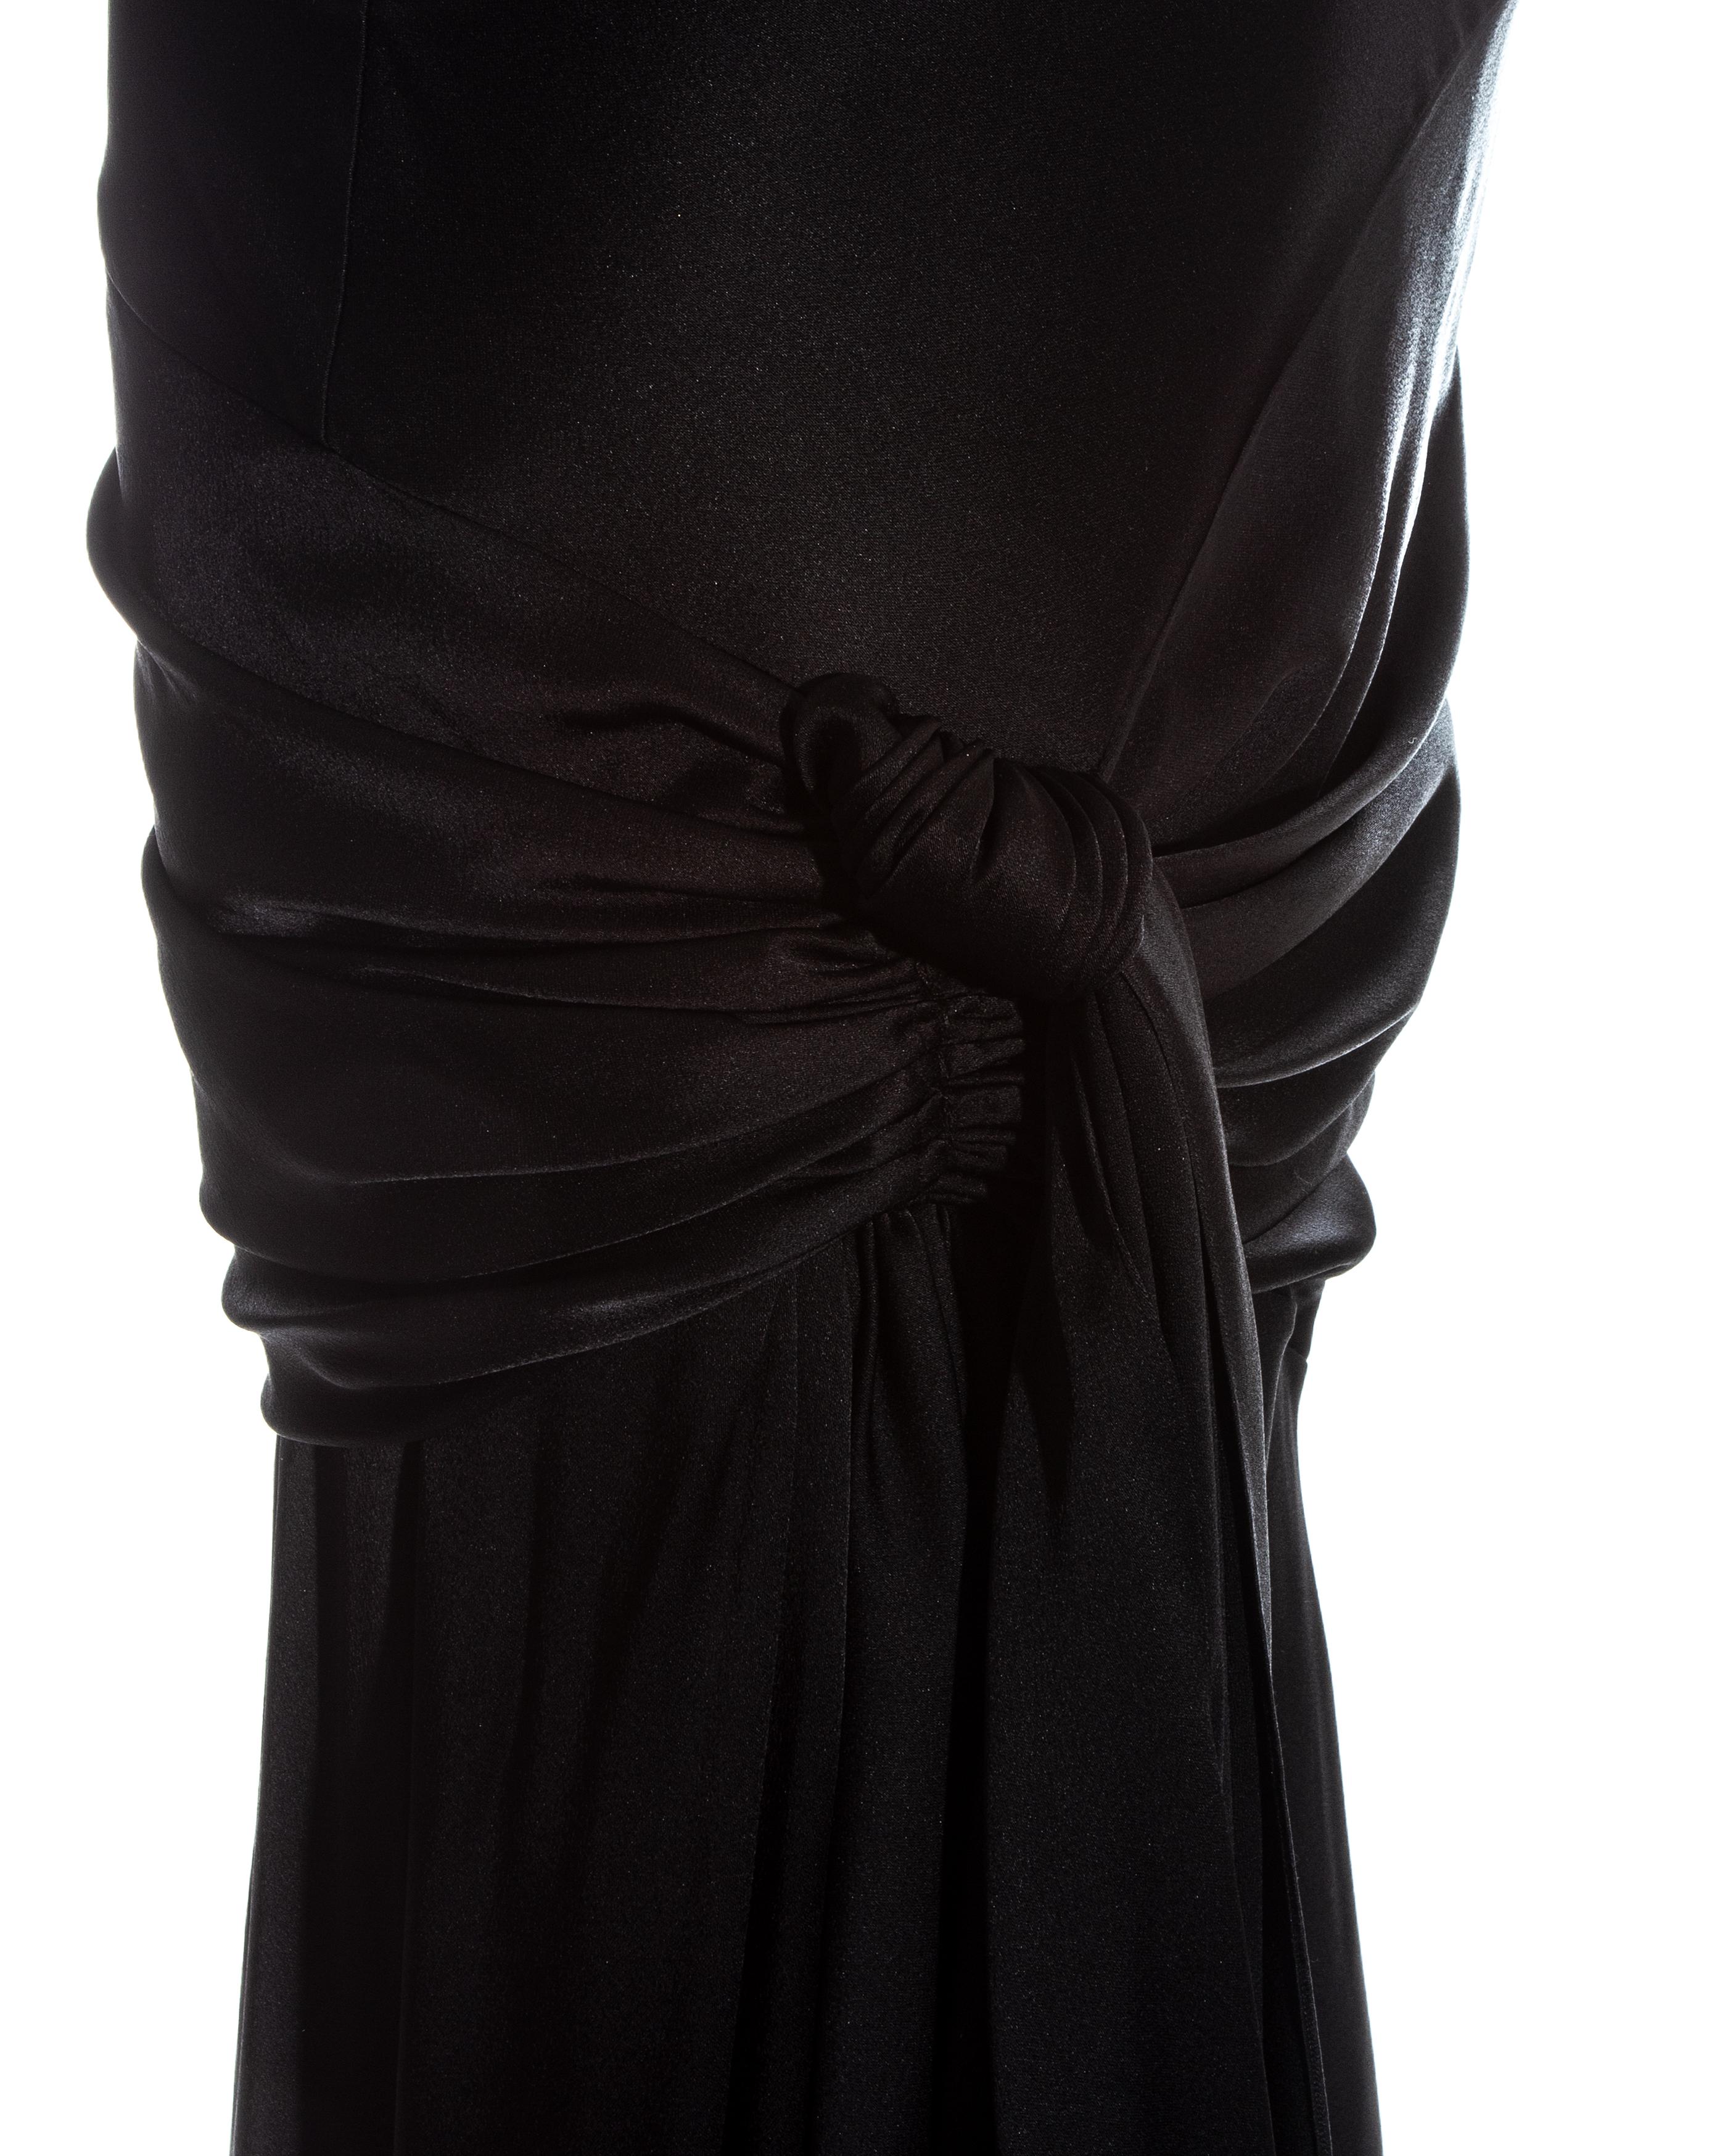 Black John Galliano black satin trained evening skirt, ss 2005